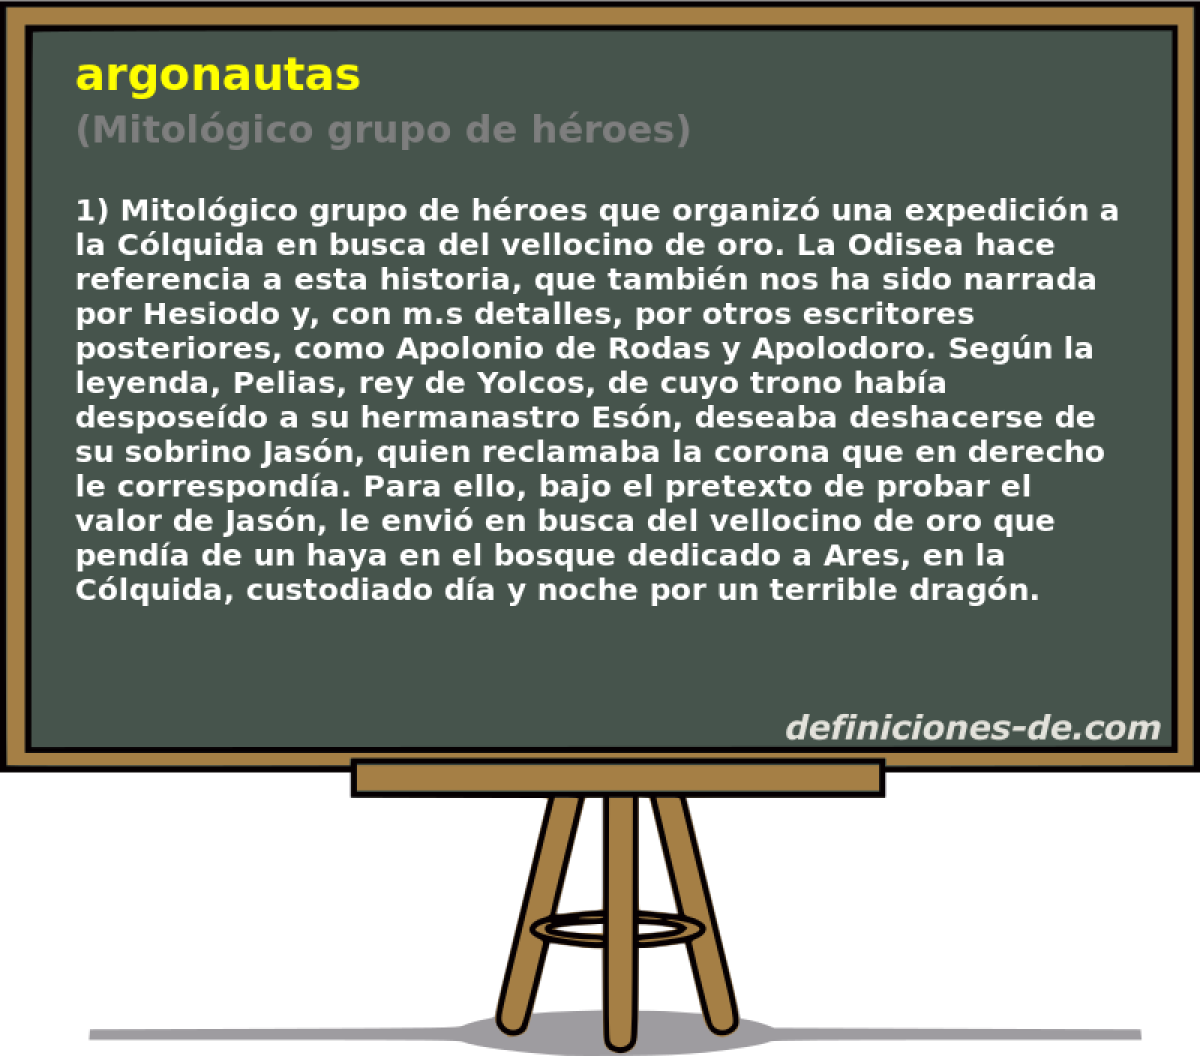 argonautas (Mitolgico grupo de hroes)